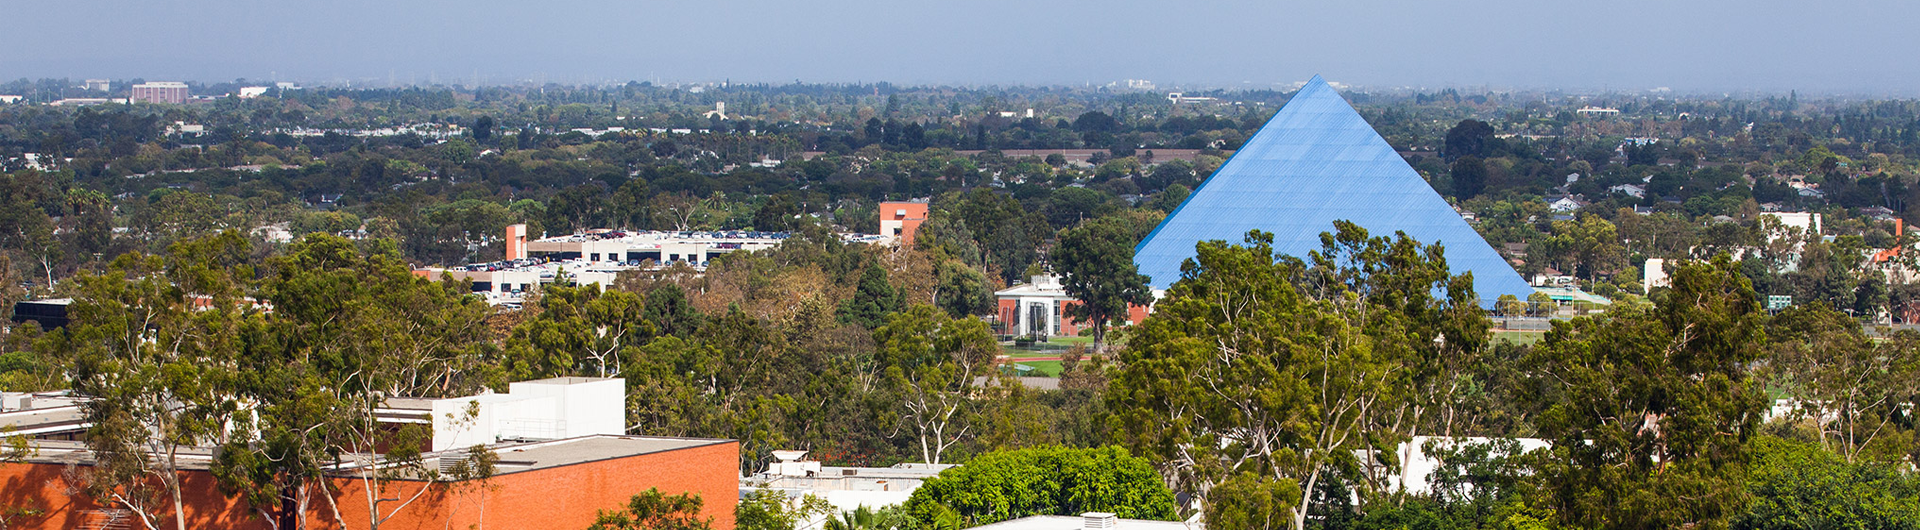 Cal State University of Long Beach